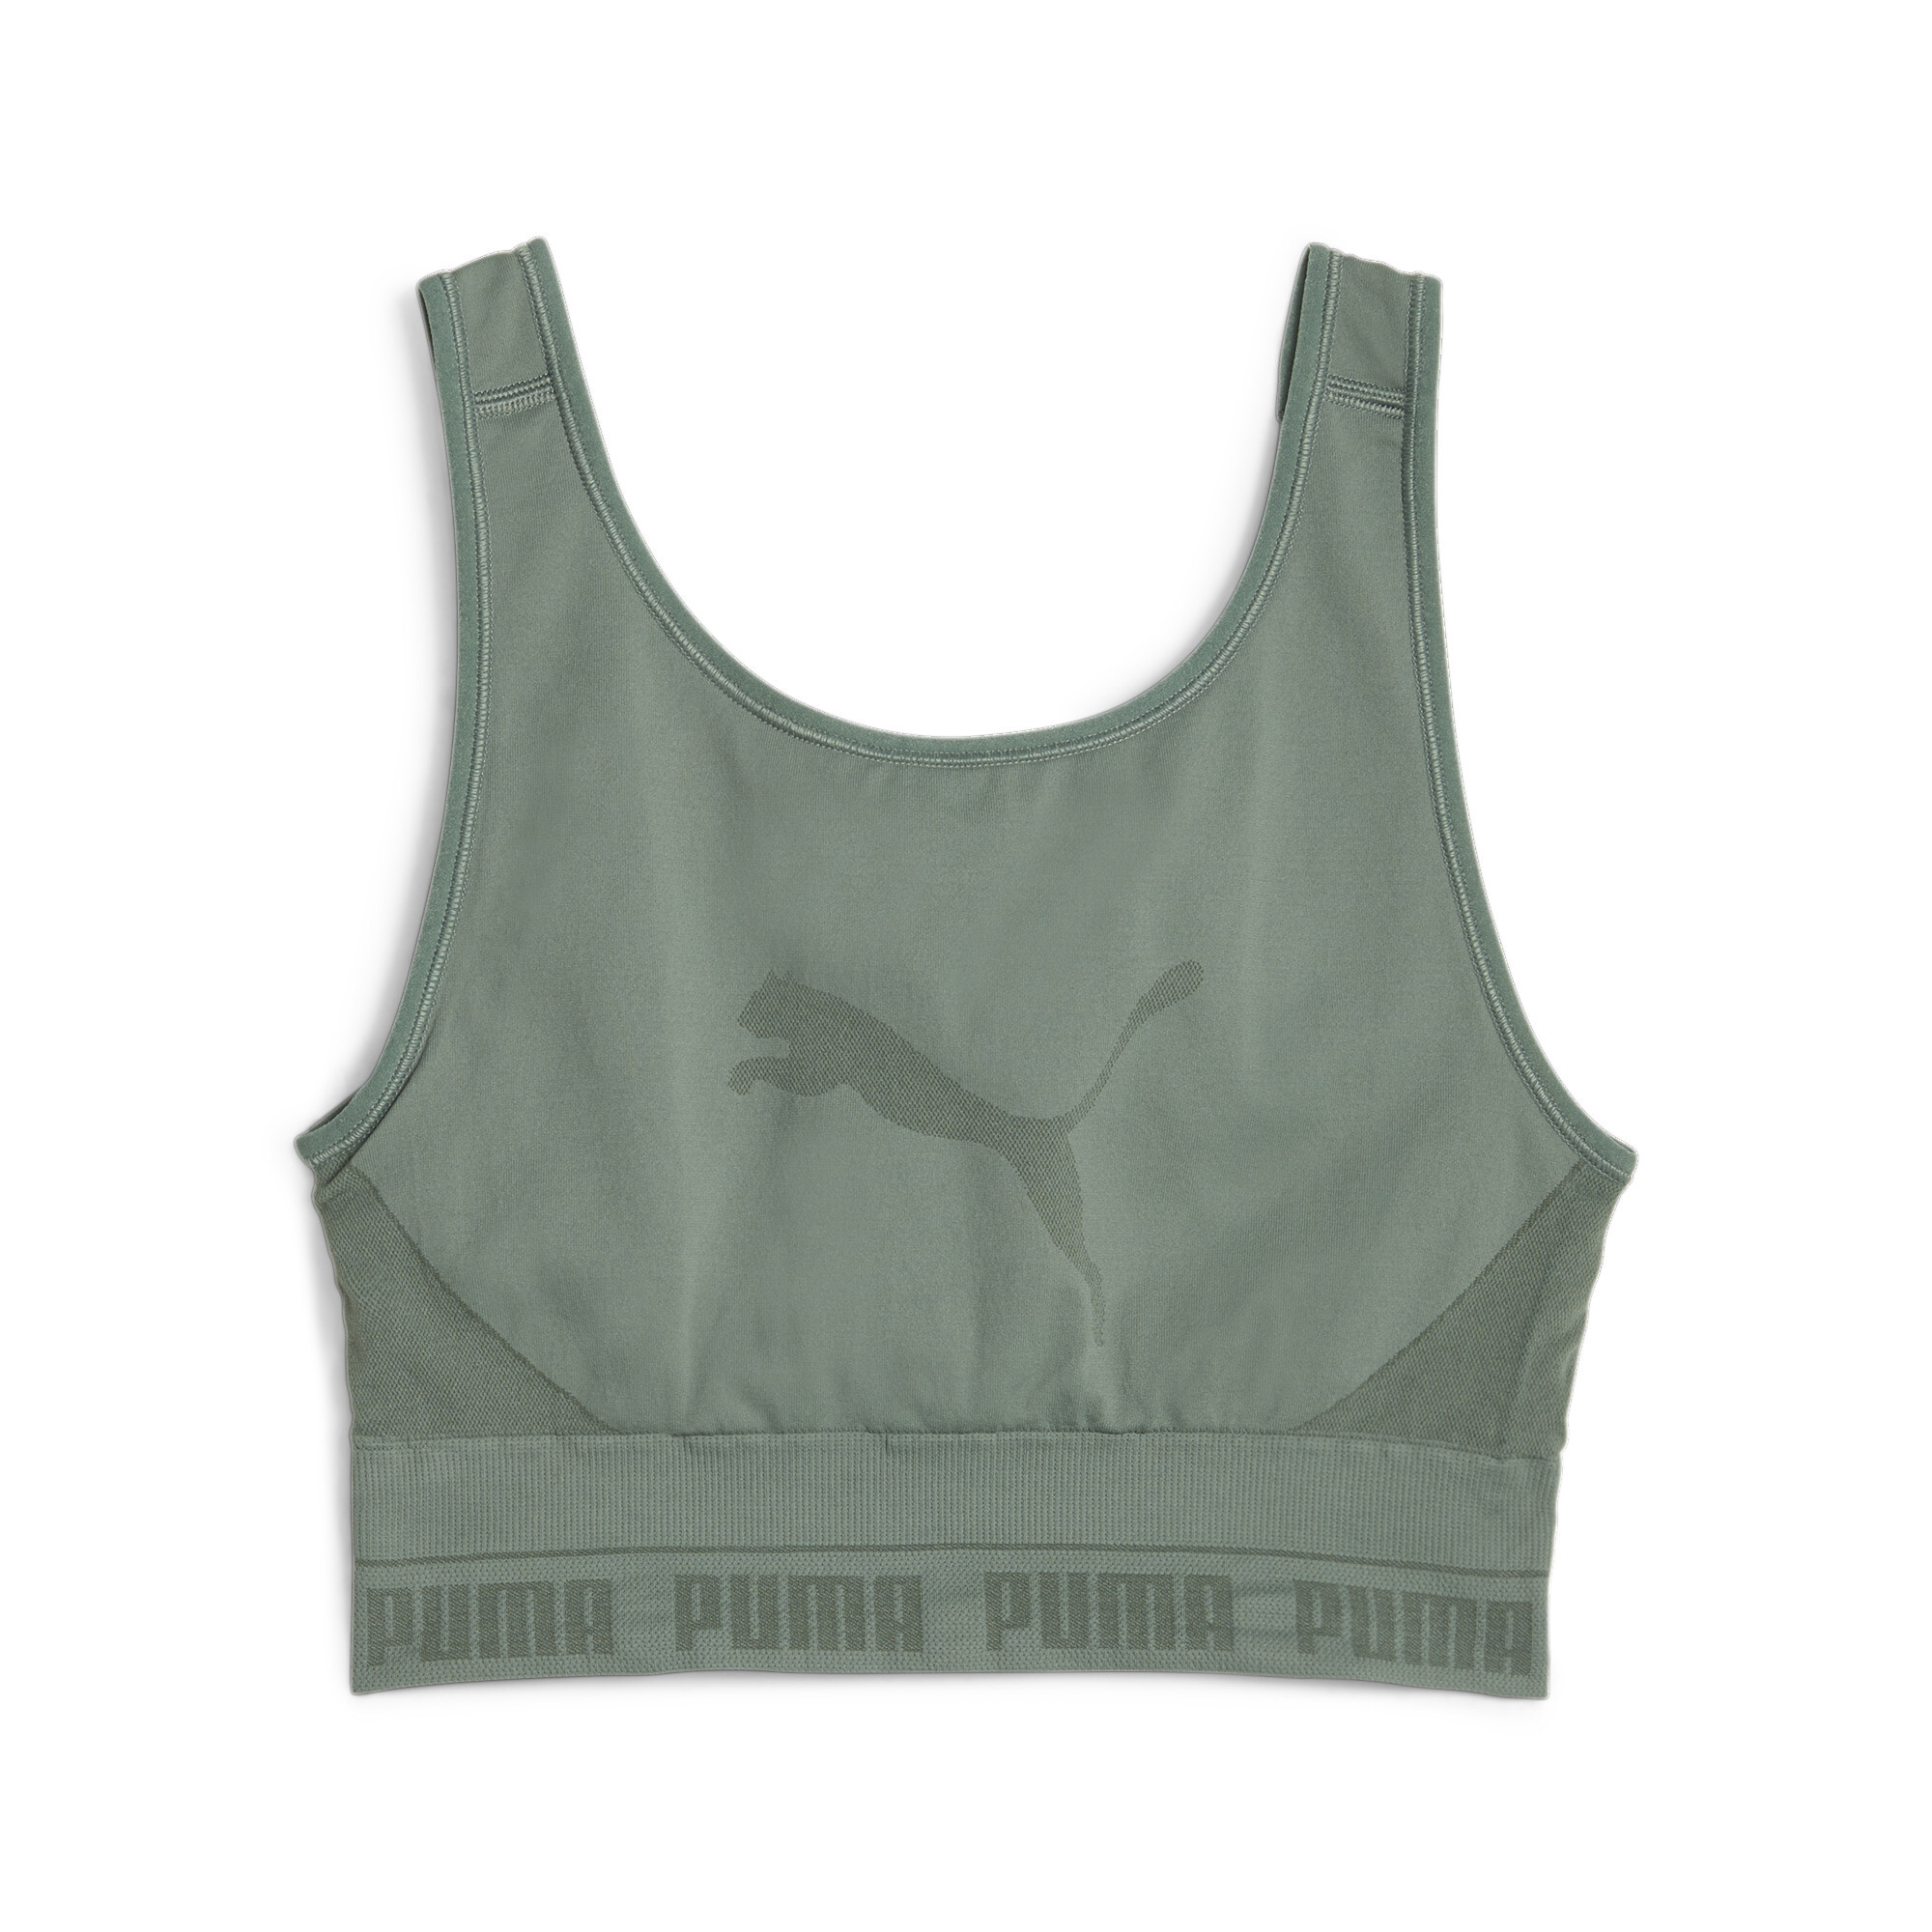 Women's Puma EVOKNIT Crop Top, Green, Size M, Clothing